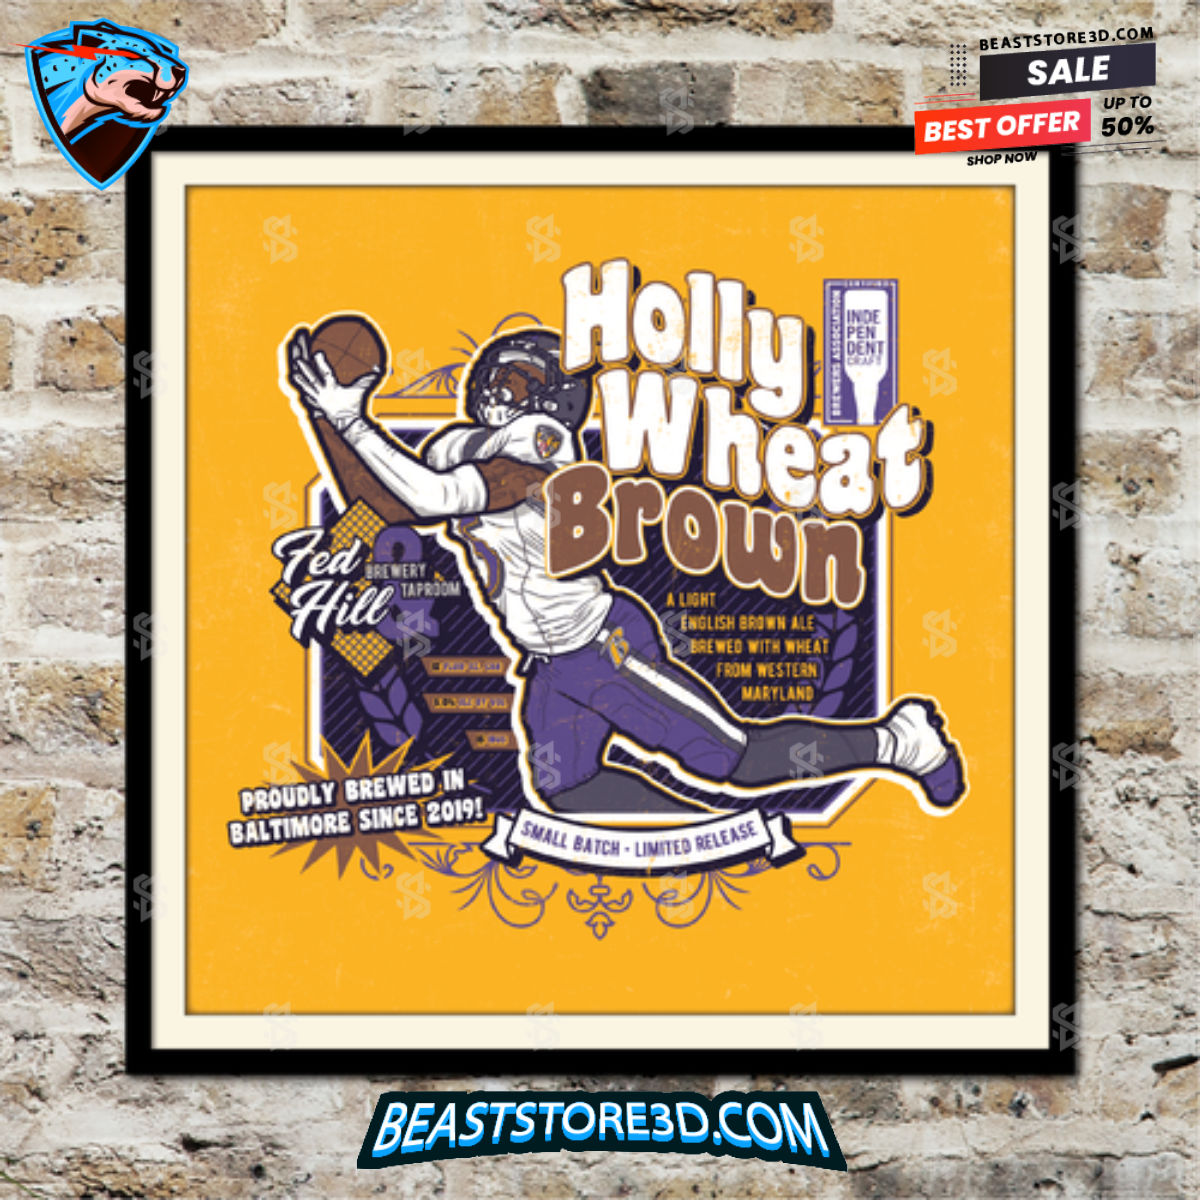 Hollywood Brown Baltimore Ravens Fake Craft Beer Label Print 1697116468007 SKy48.jpg